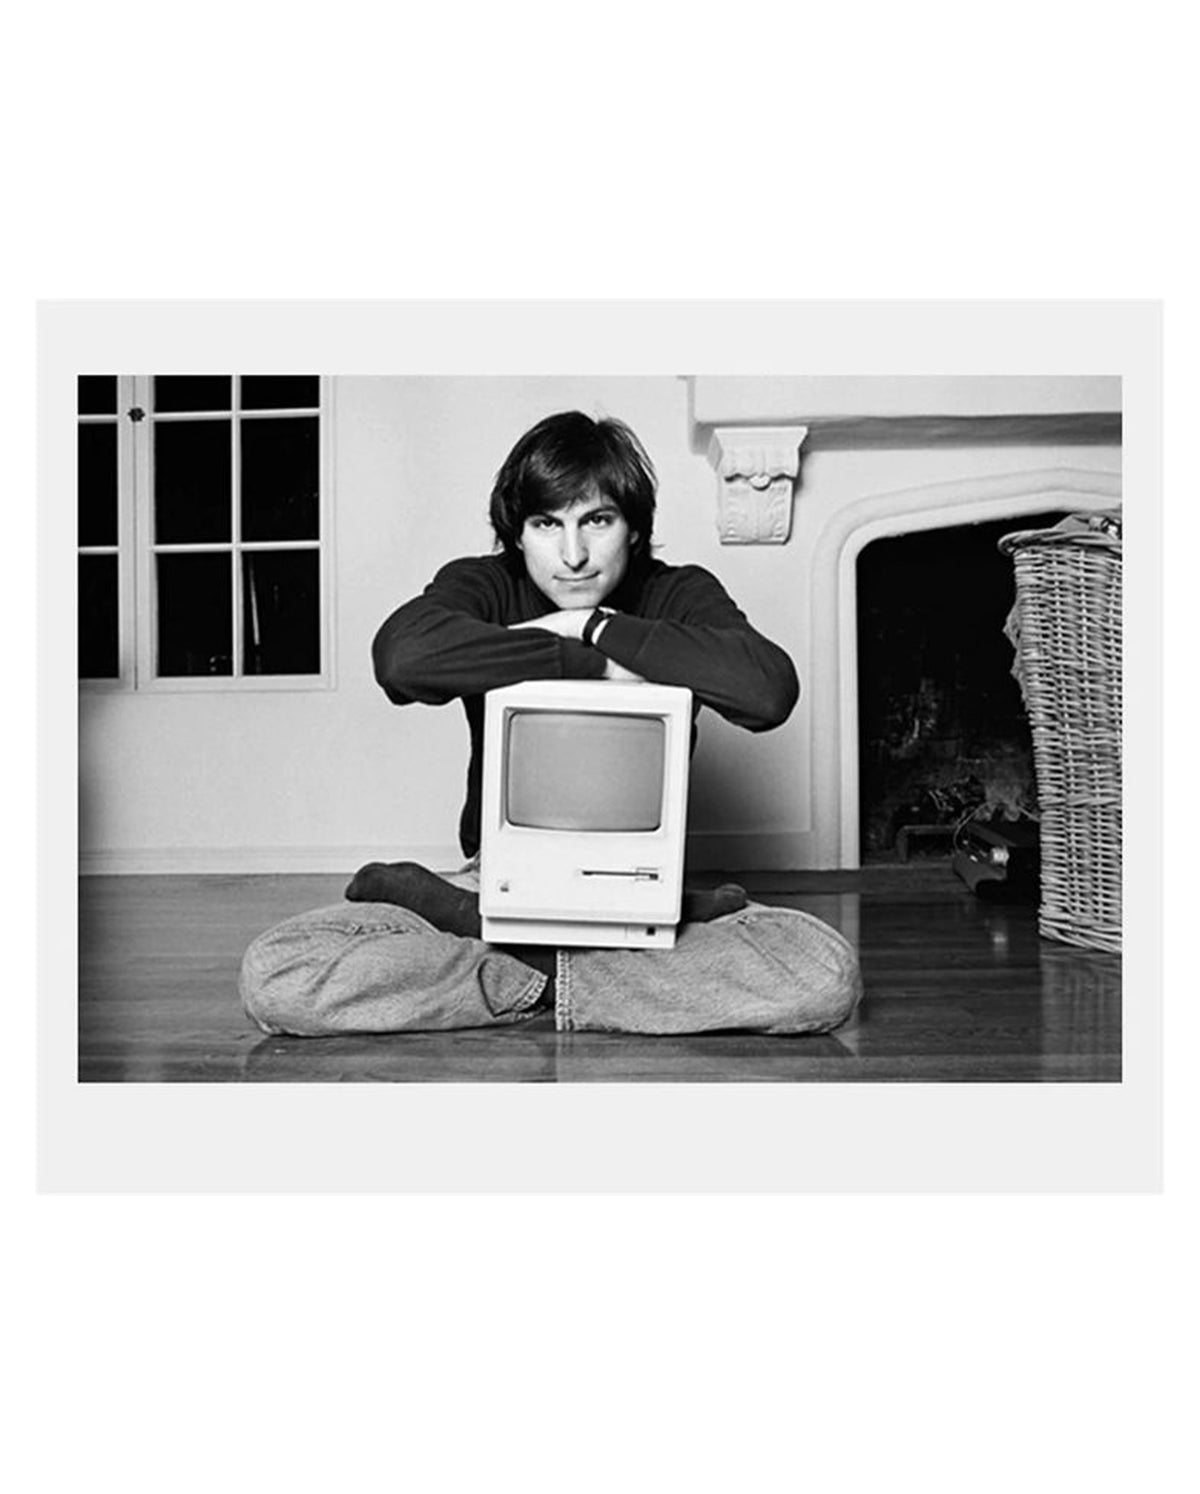 Steve Jobs "Mac On Lap" Print 36/50